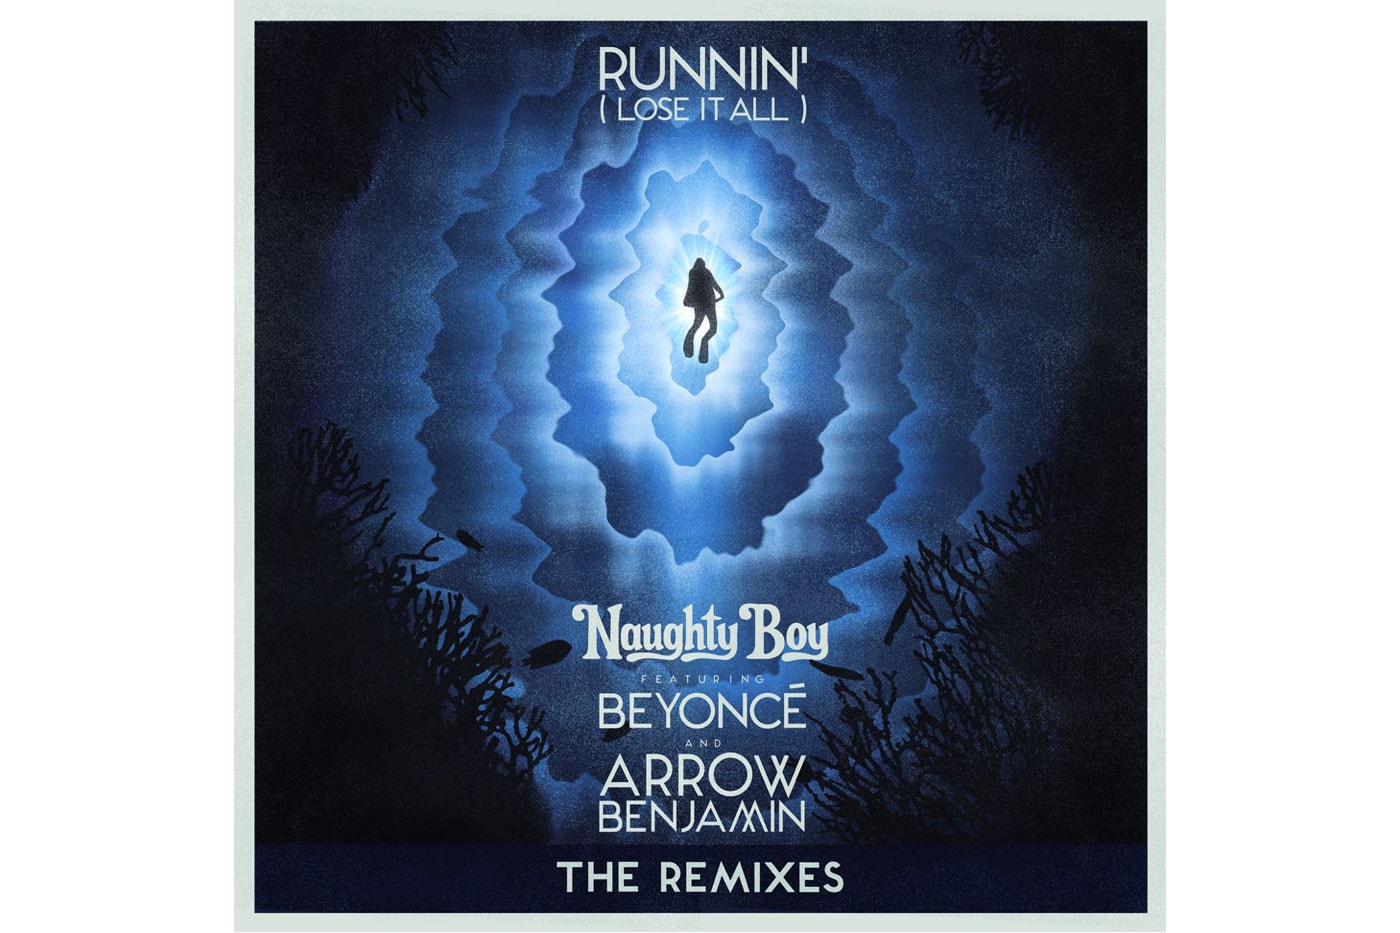 Naughty Boy featuring Beyoncé & Arrow Benjamin – Runnin’ (Lose It All)